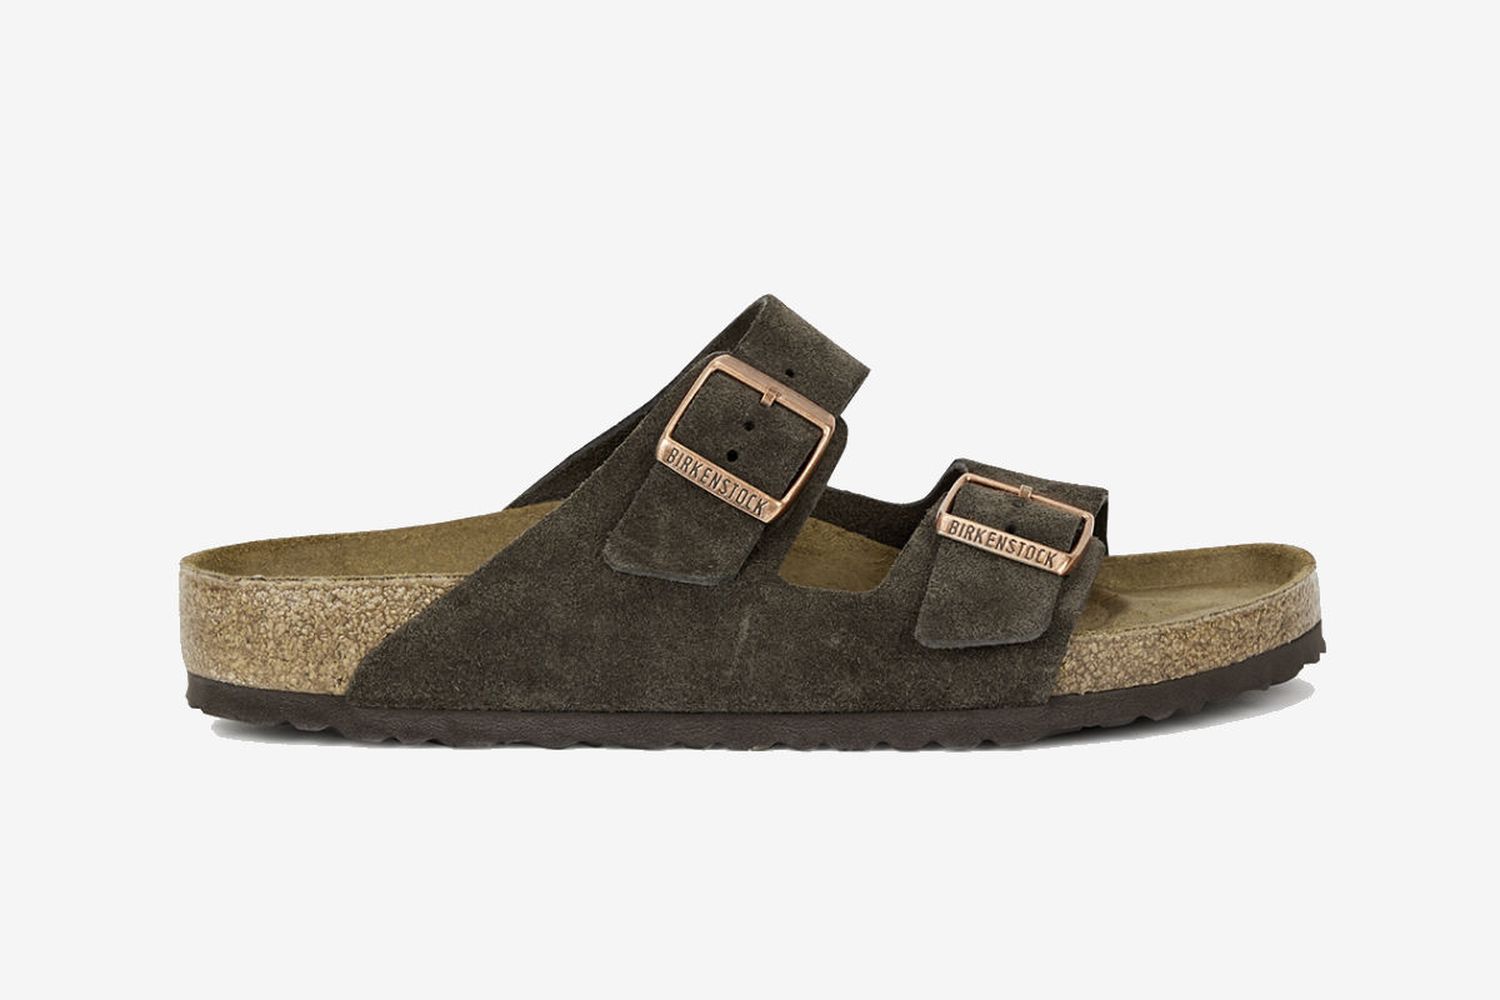 We’ve Selected the Best Birkenstock Sandals for You